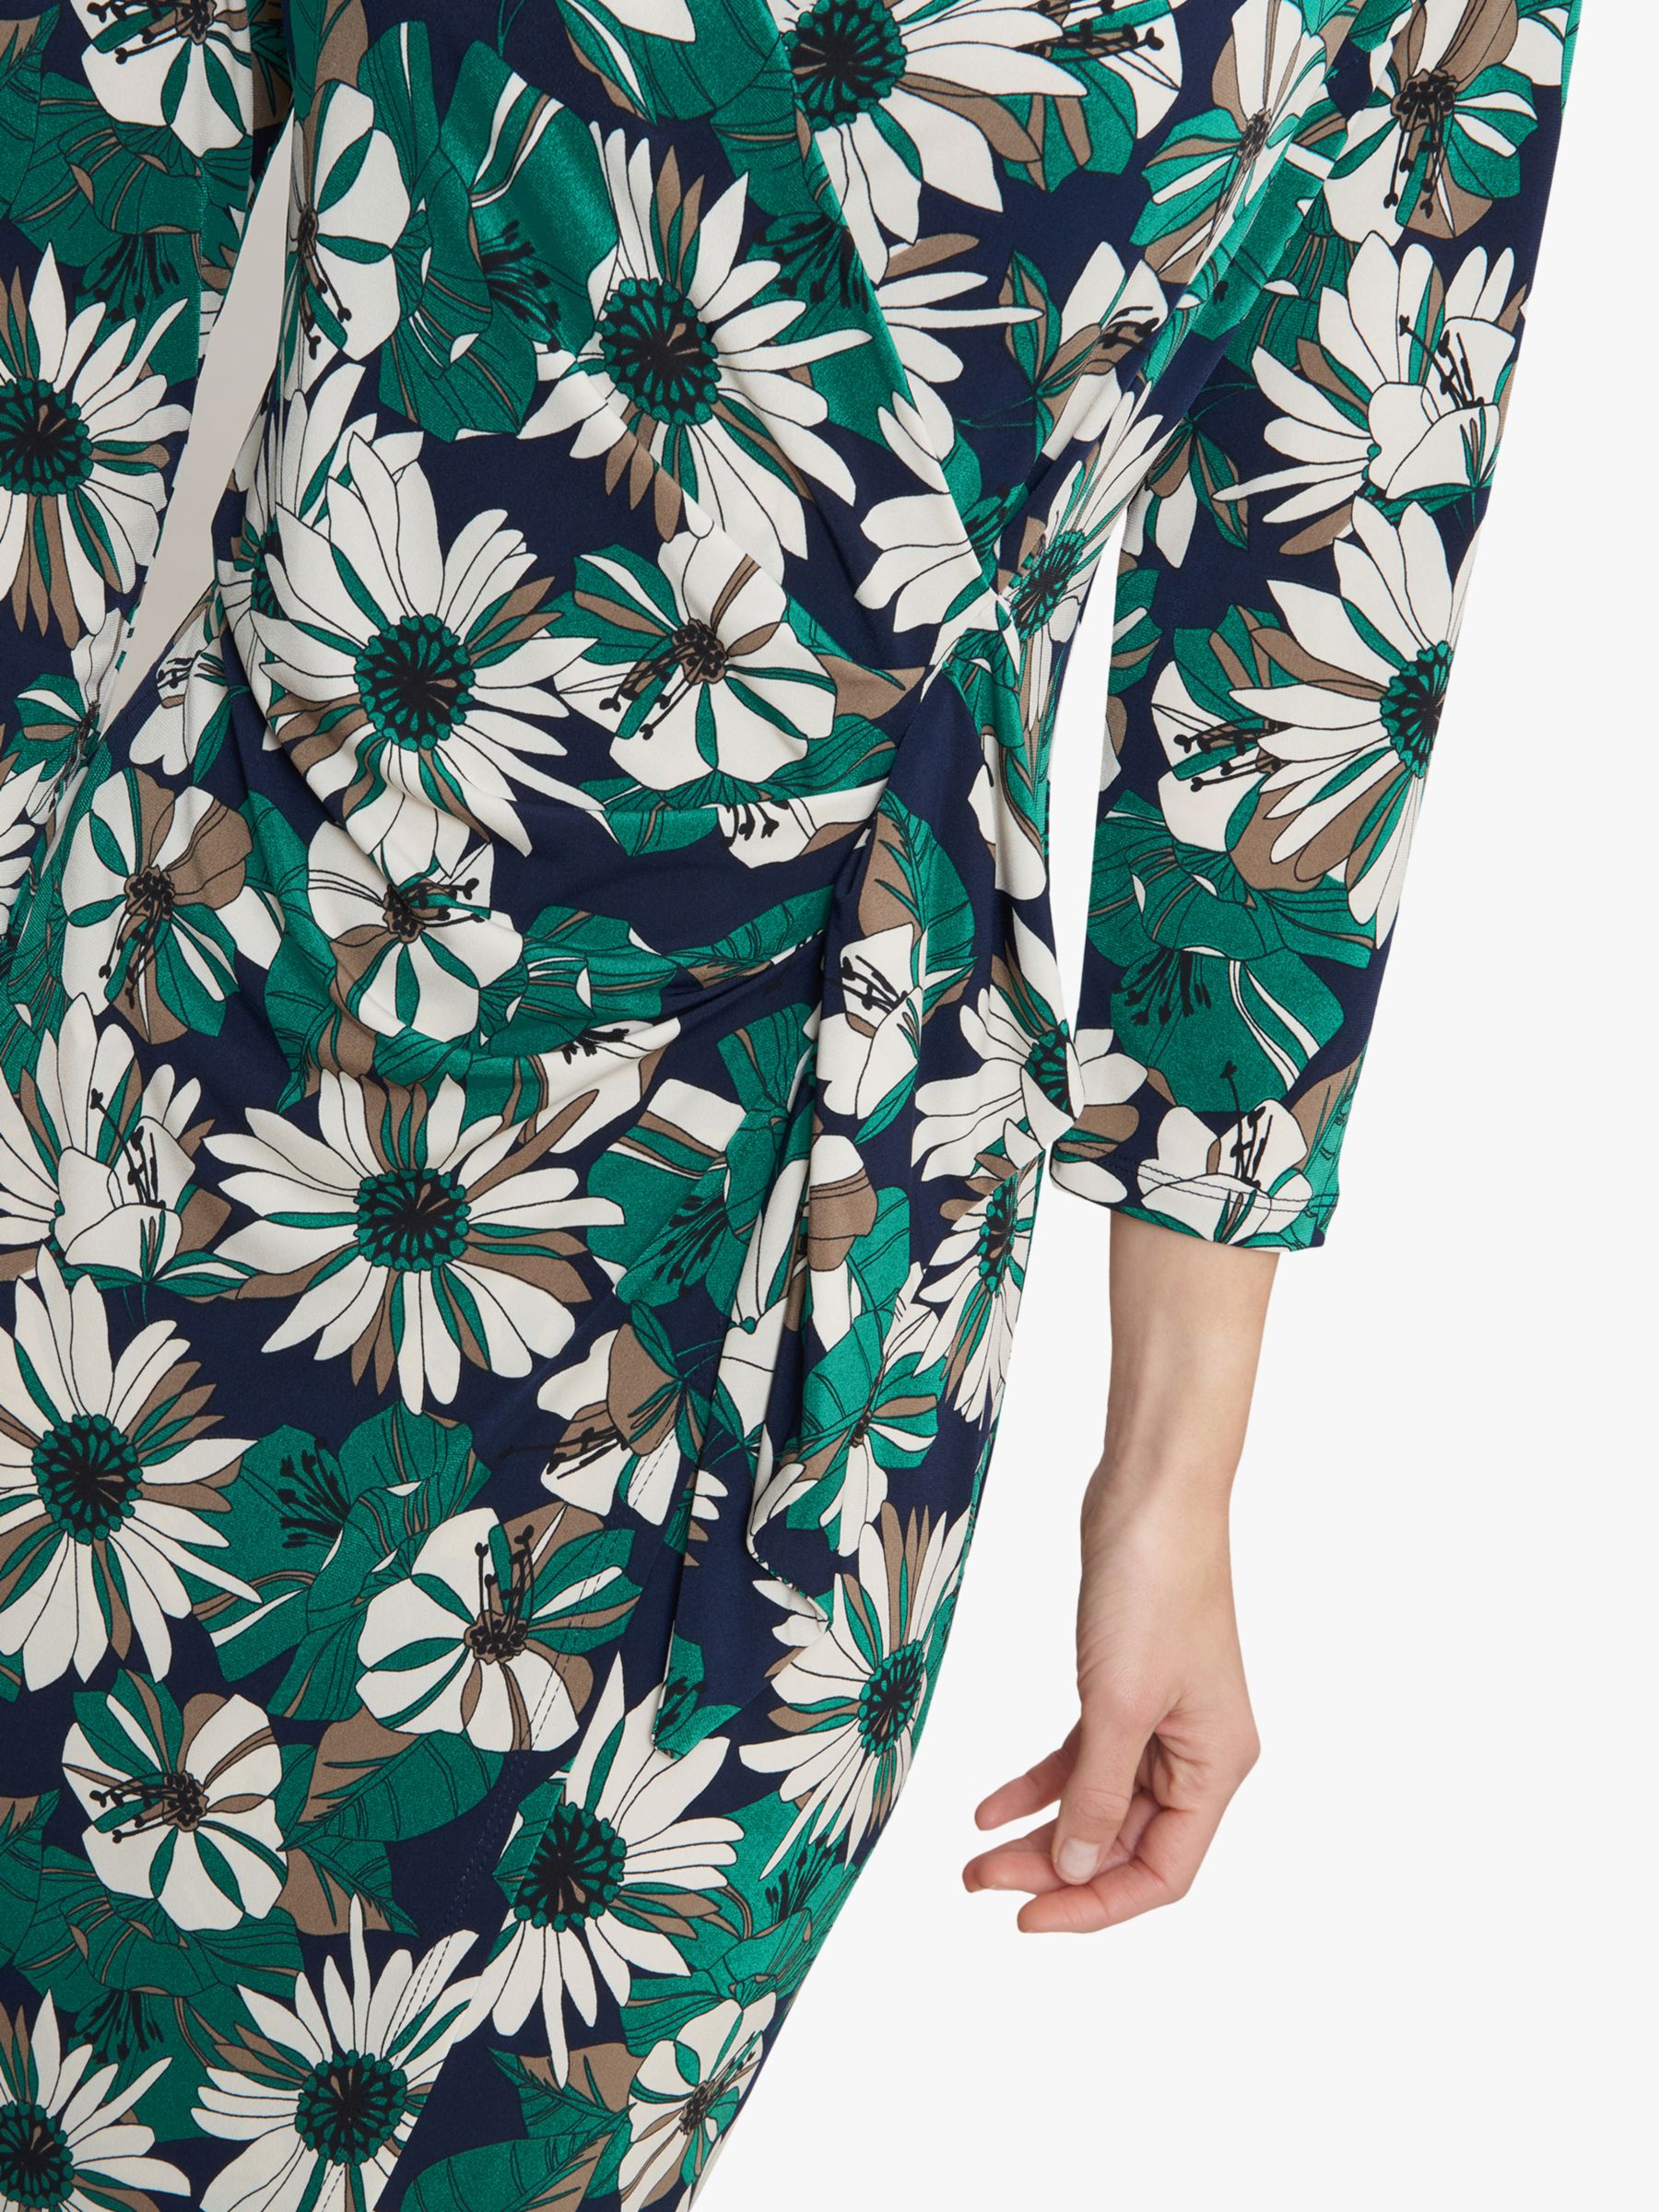 Gina Bacconi Talie Floral Print Jersey Dress, Navy/Green, 8